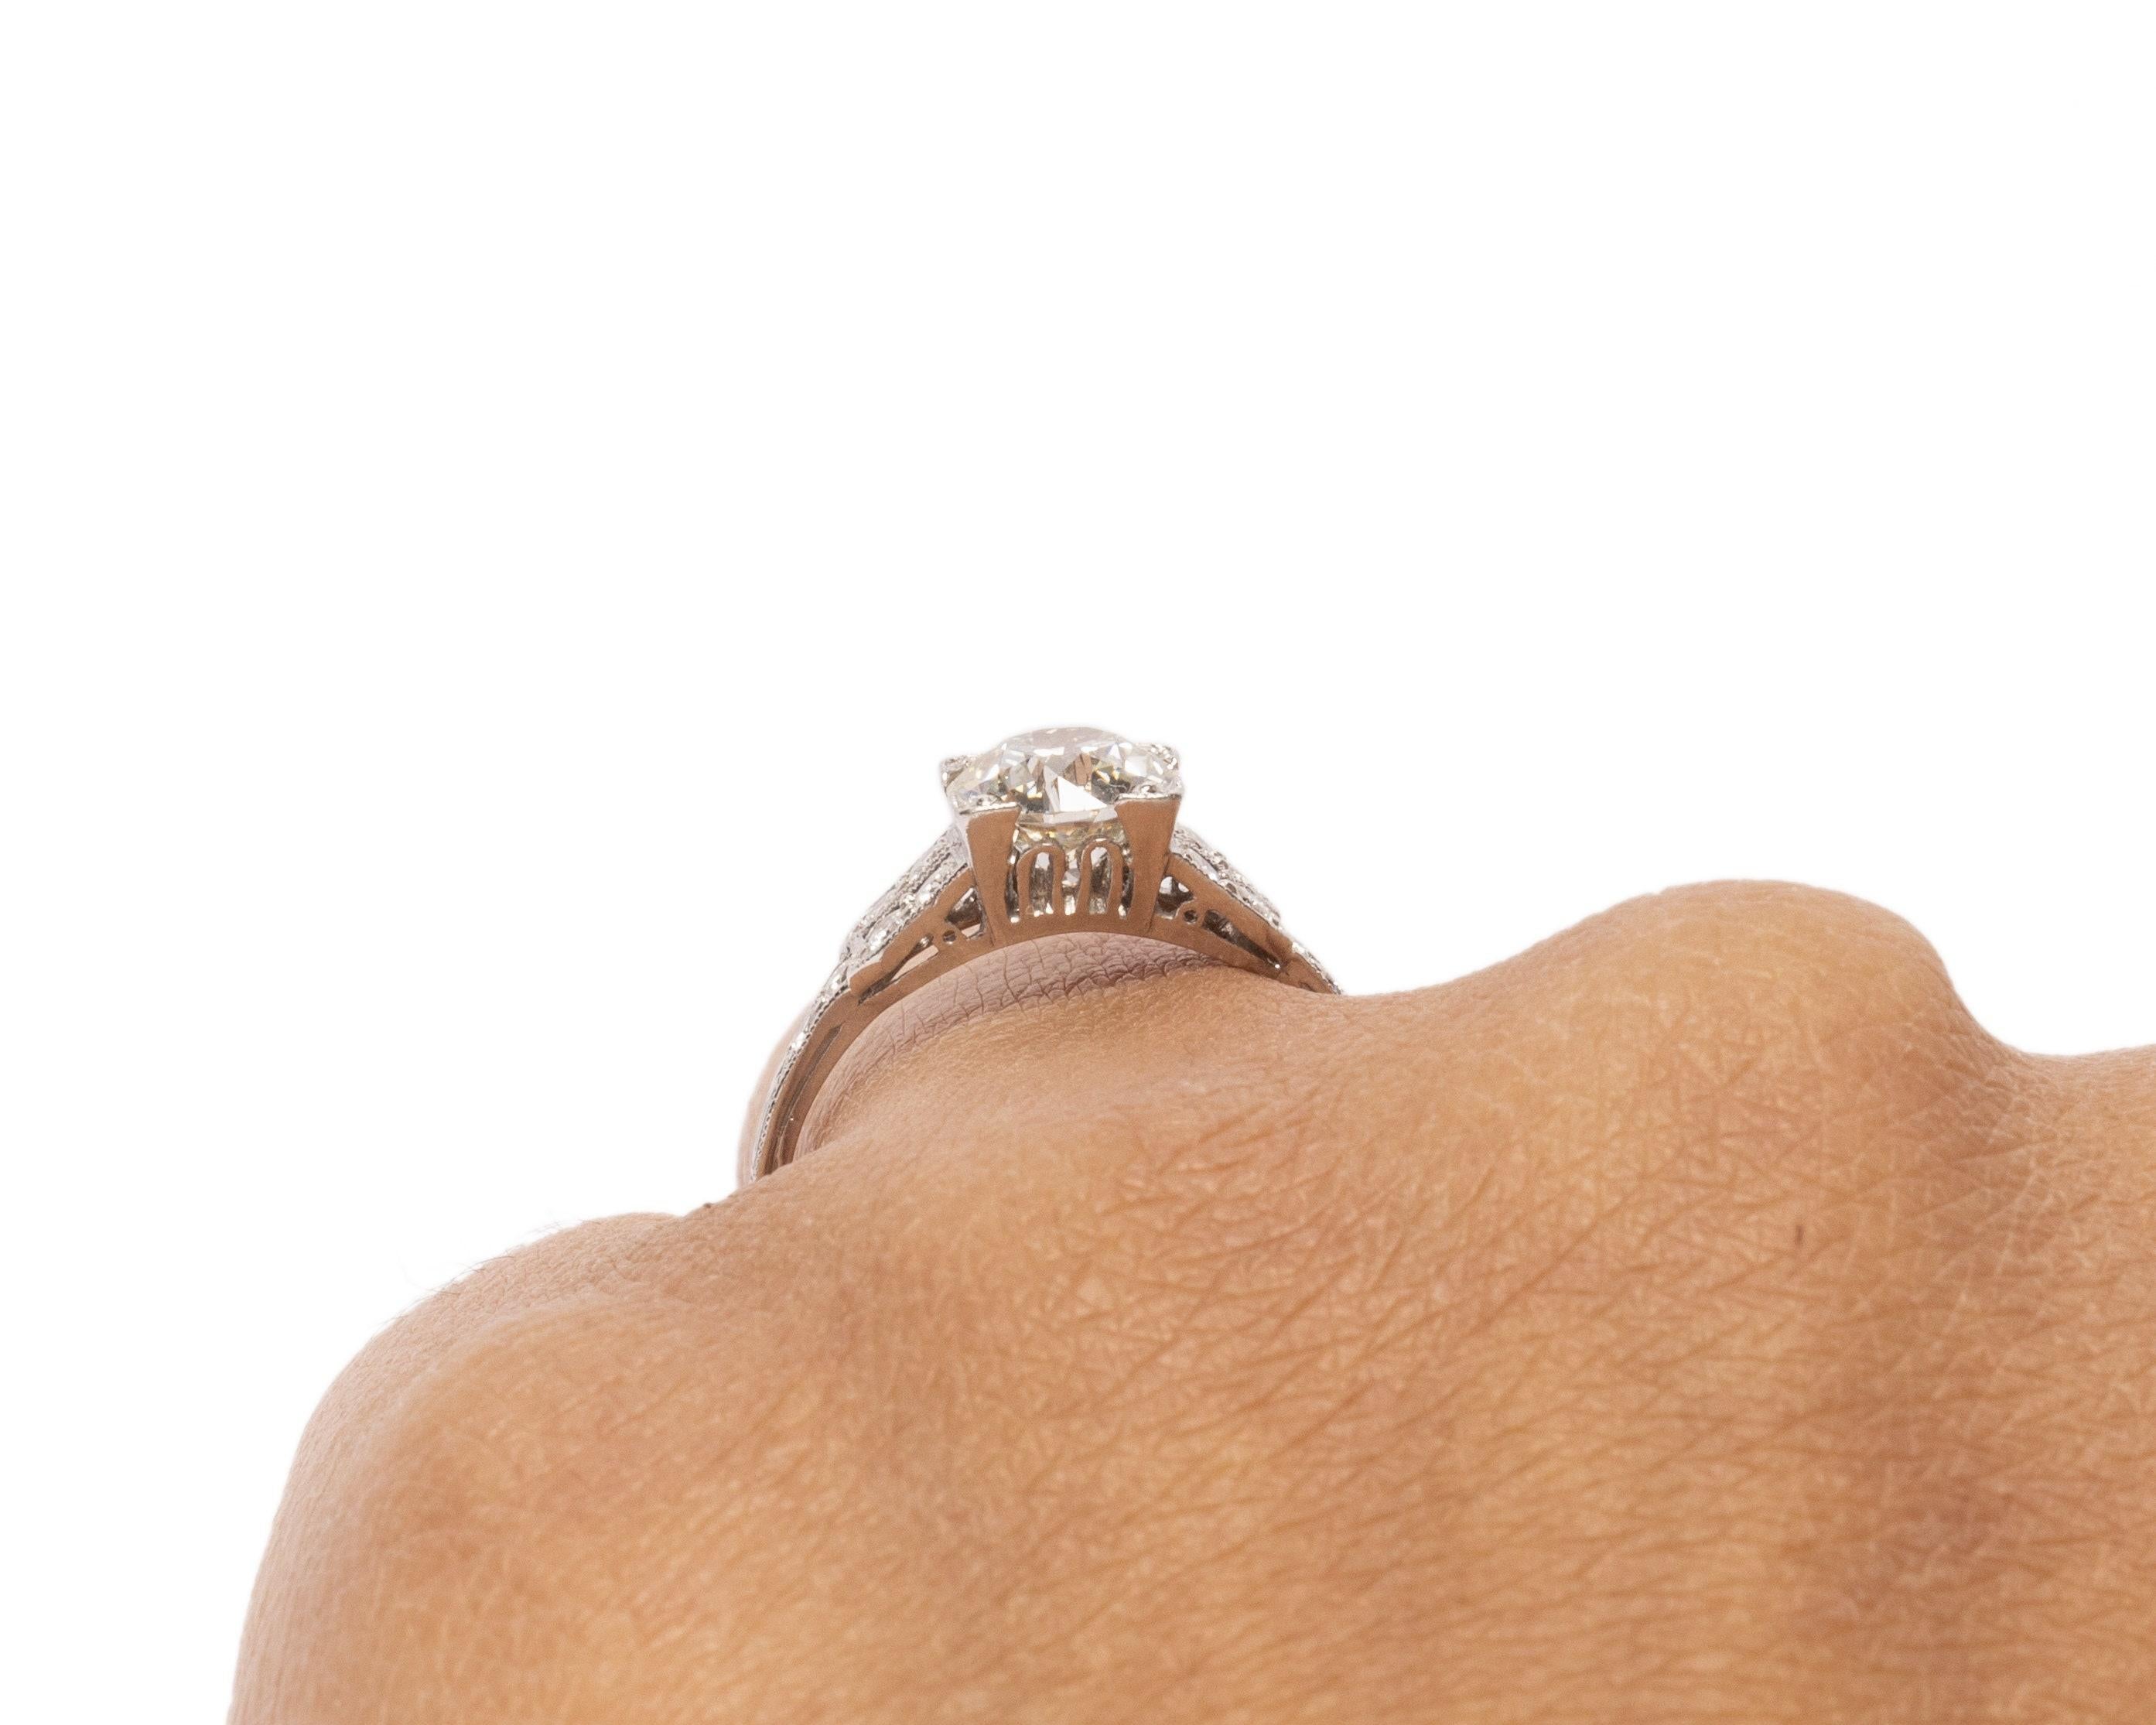 Circa 1920's Platinum 1.52 CTTW Old European Cut Diamond Engagement Ring For Sale 2